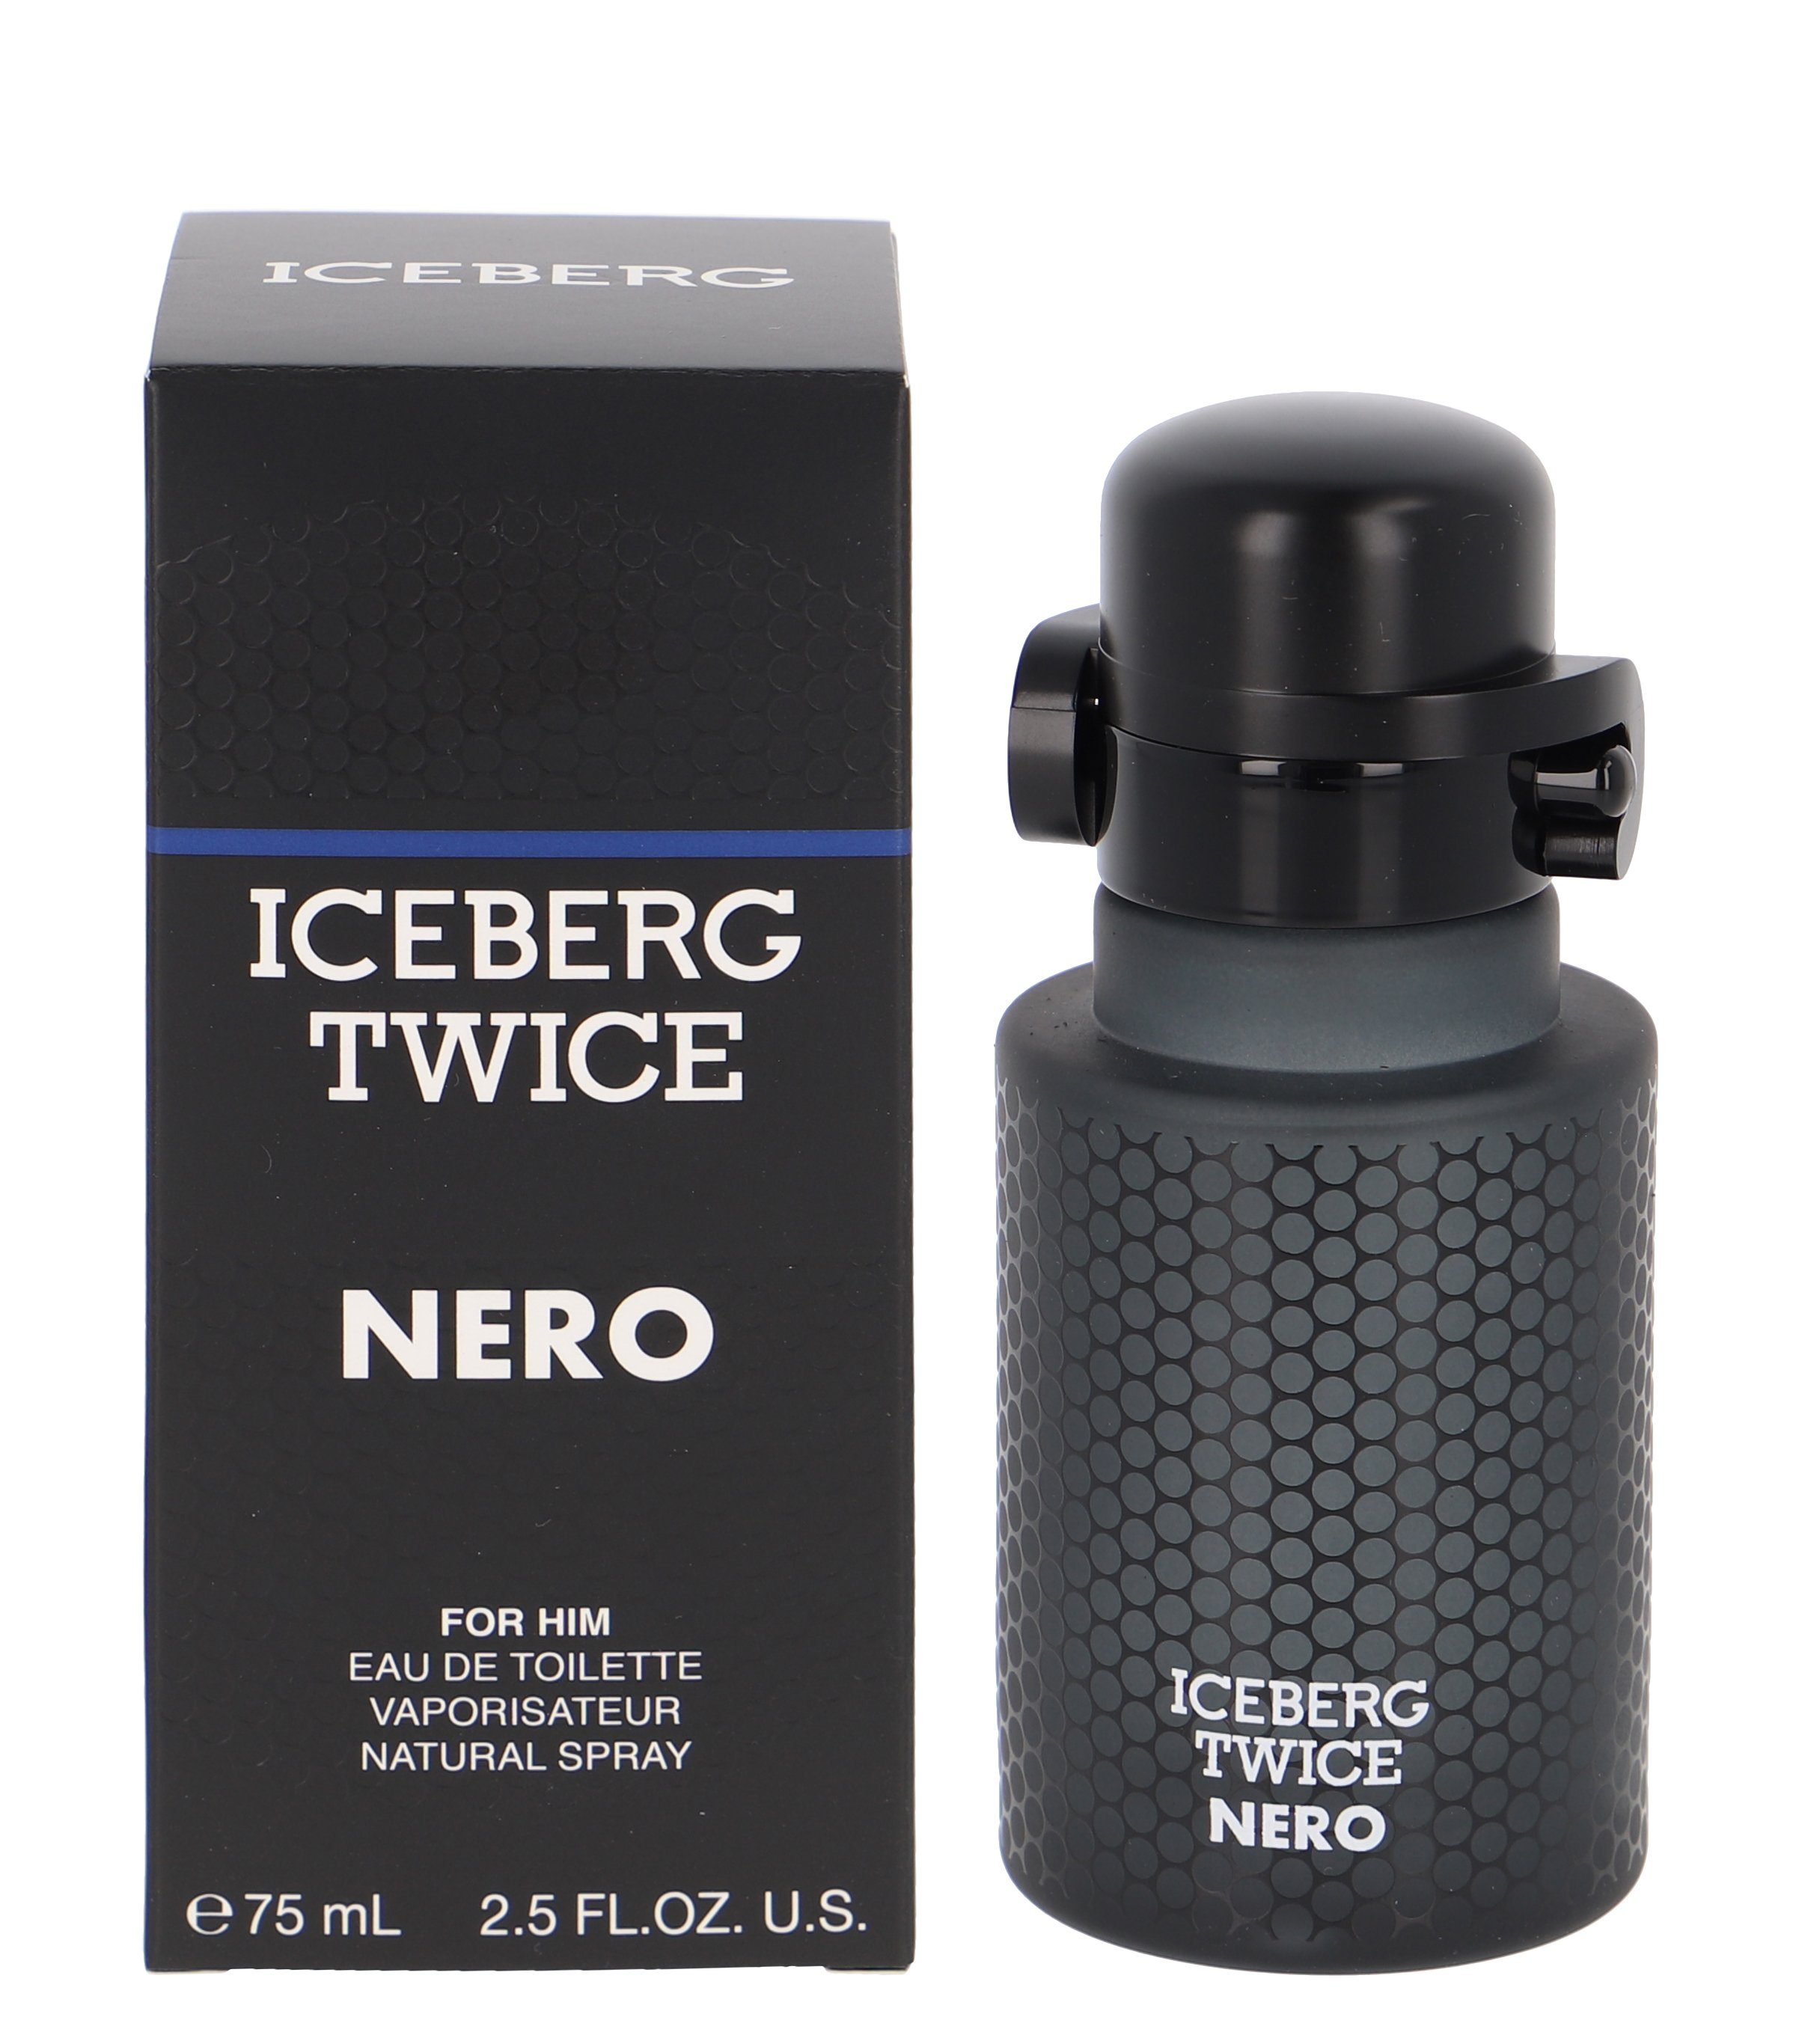 de Nero Twice ICEBERG Toilette Eau Homme Iceberg